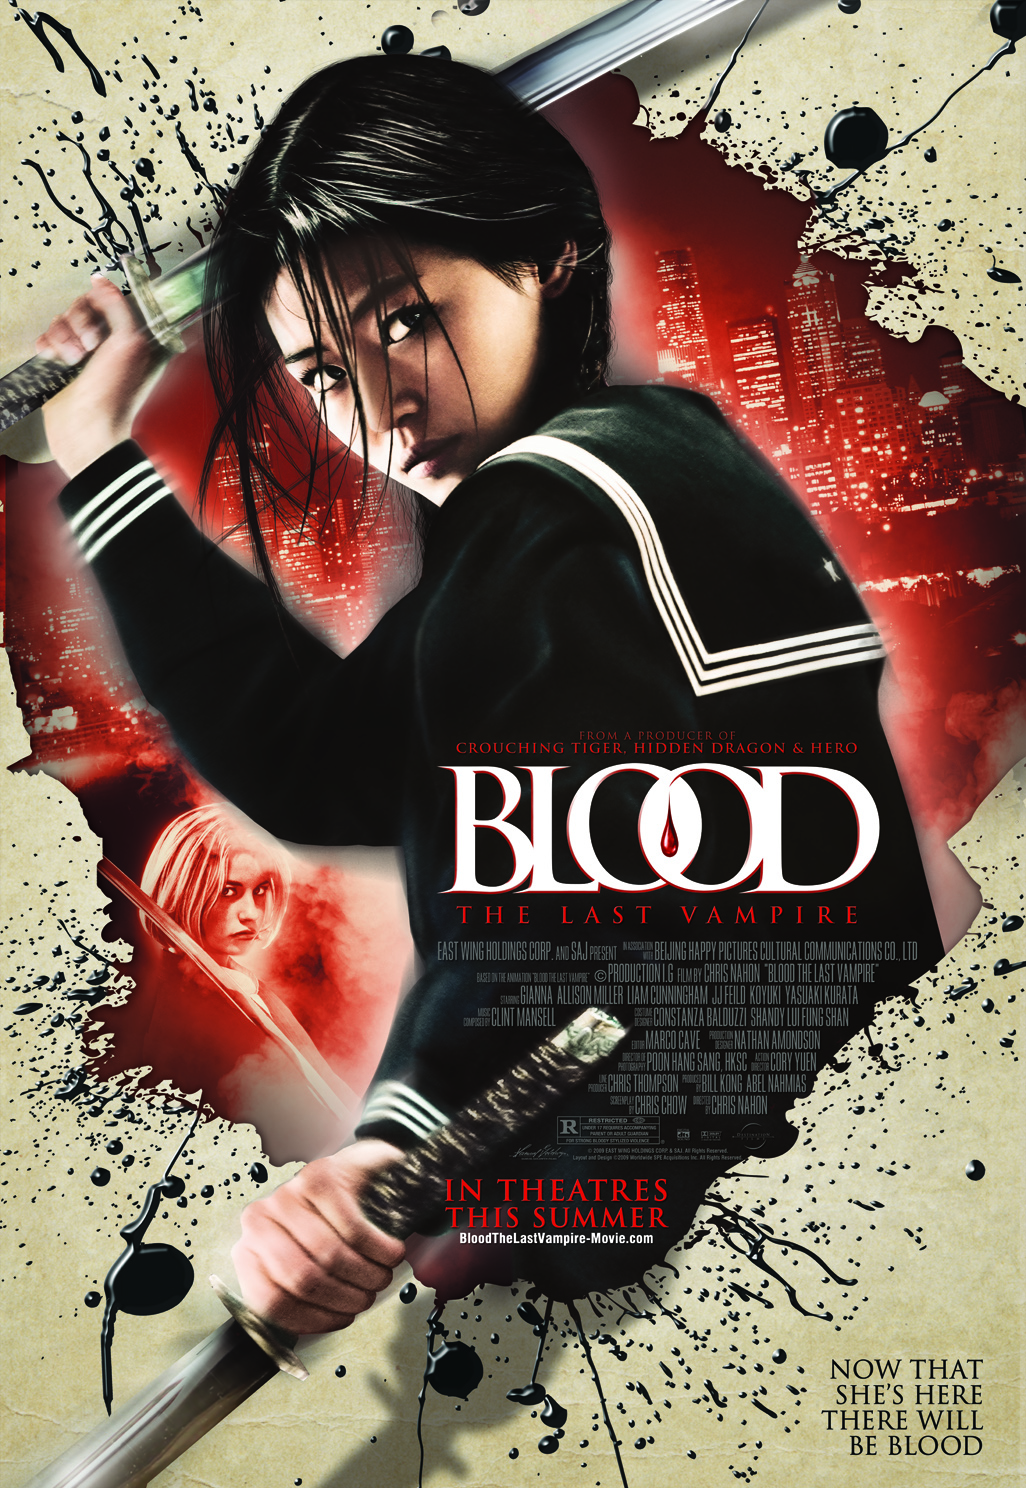 In Blood movie